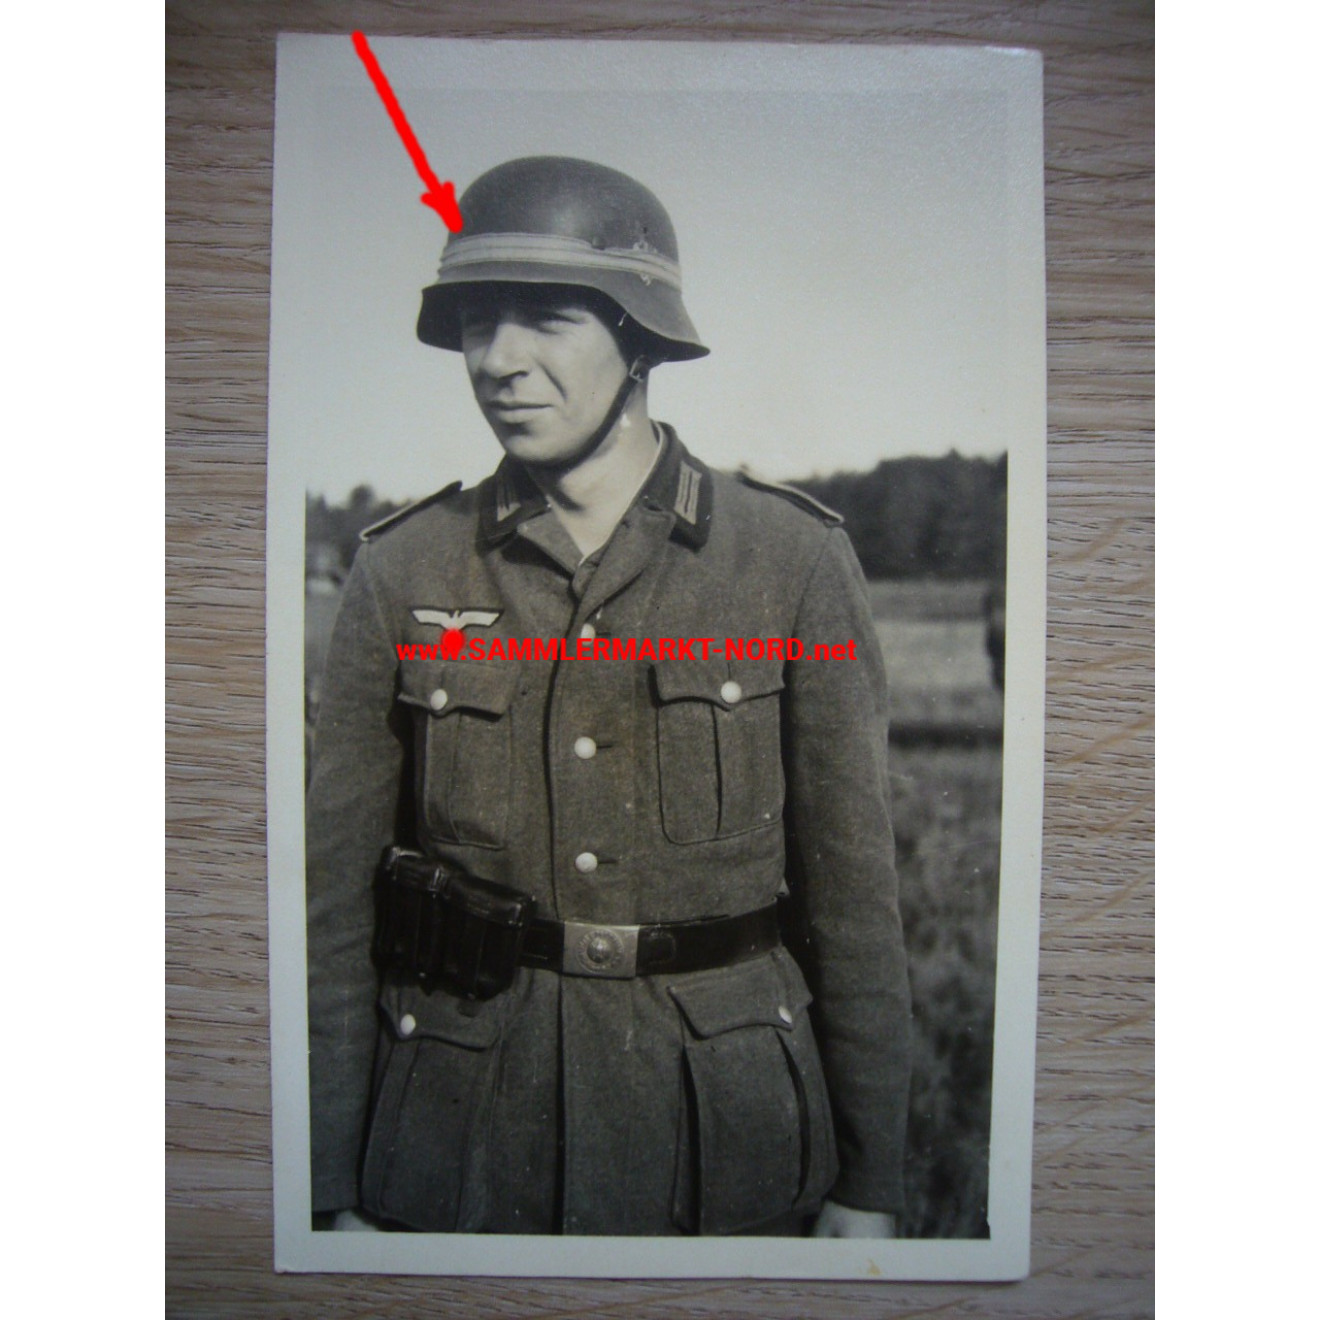 Wehrmacht soldier with manoeuvre ribbon on steel helmet